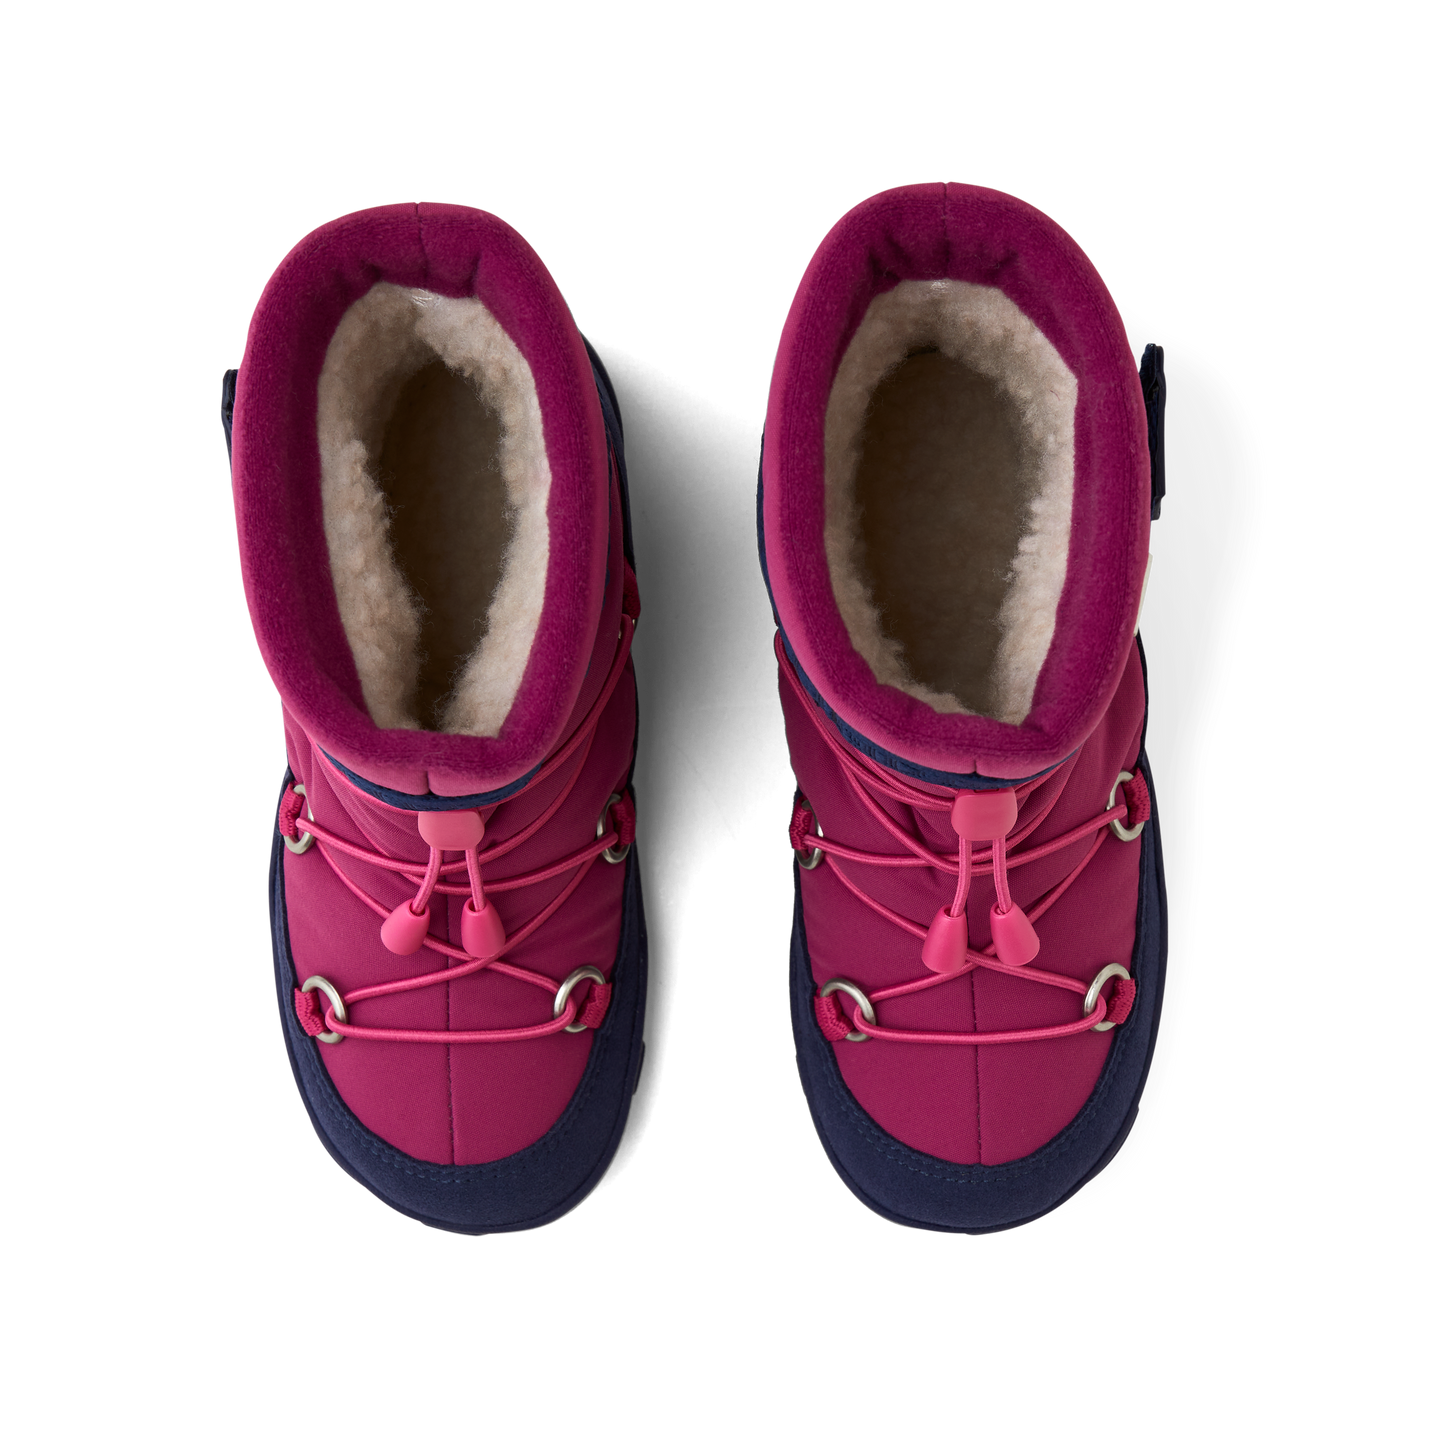 Affenzahn Snow Boot Vegan Snowy barfods vinterstøvler til børn i farven flamingo, top